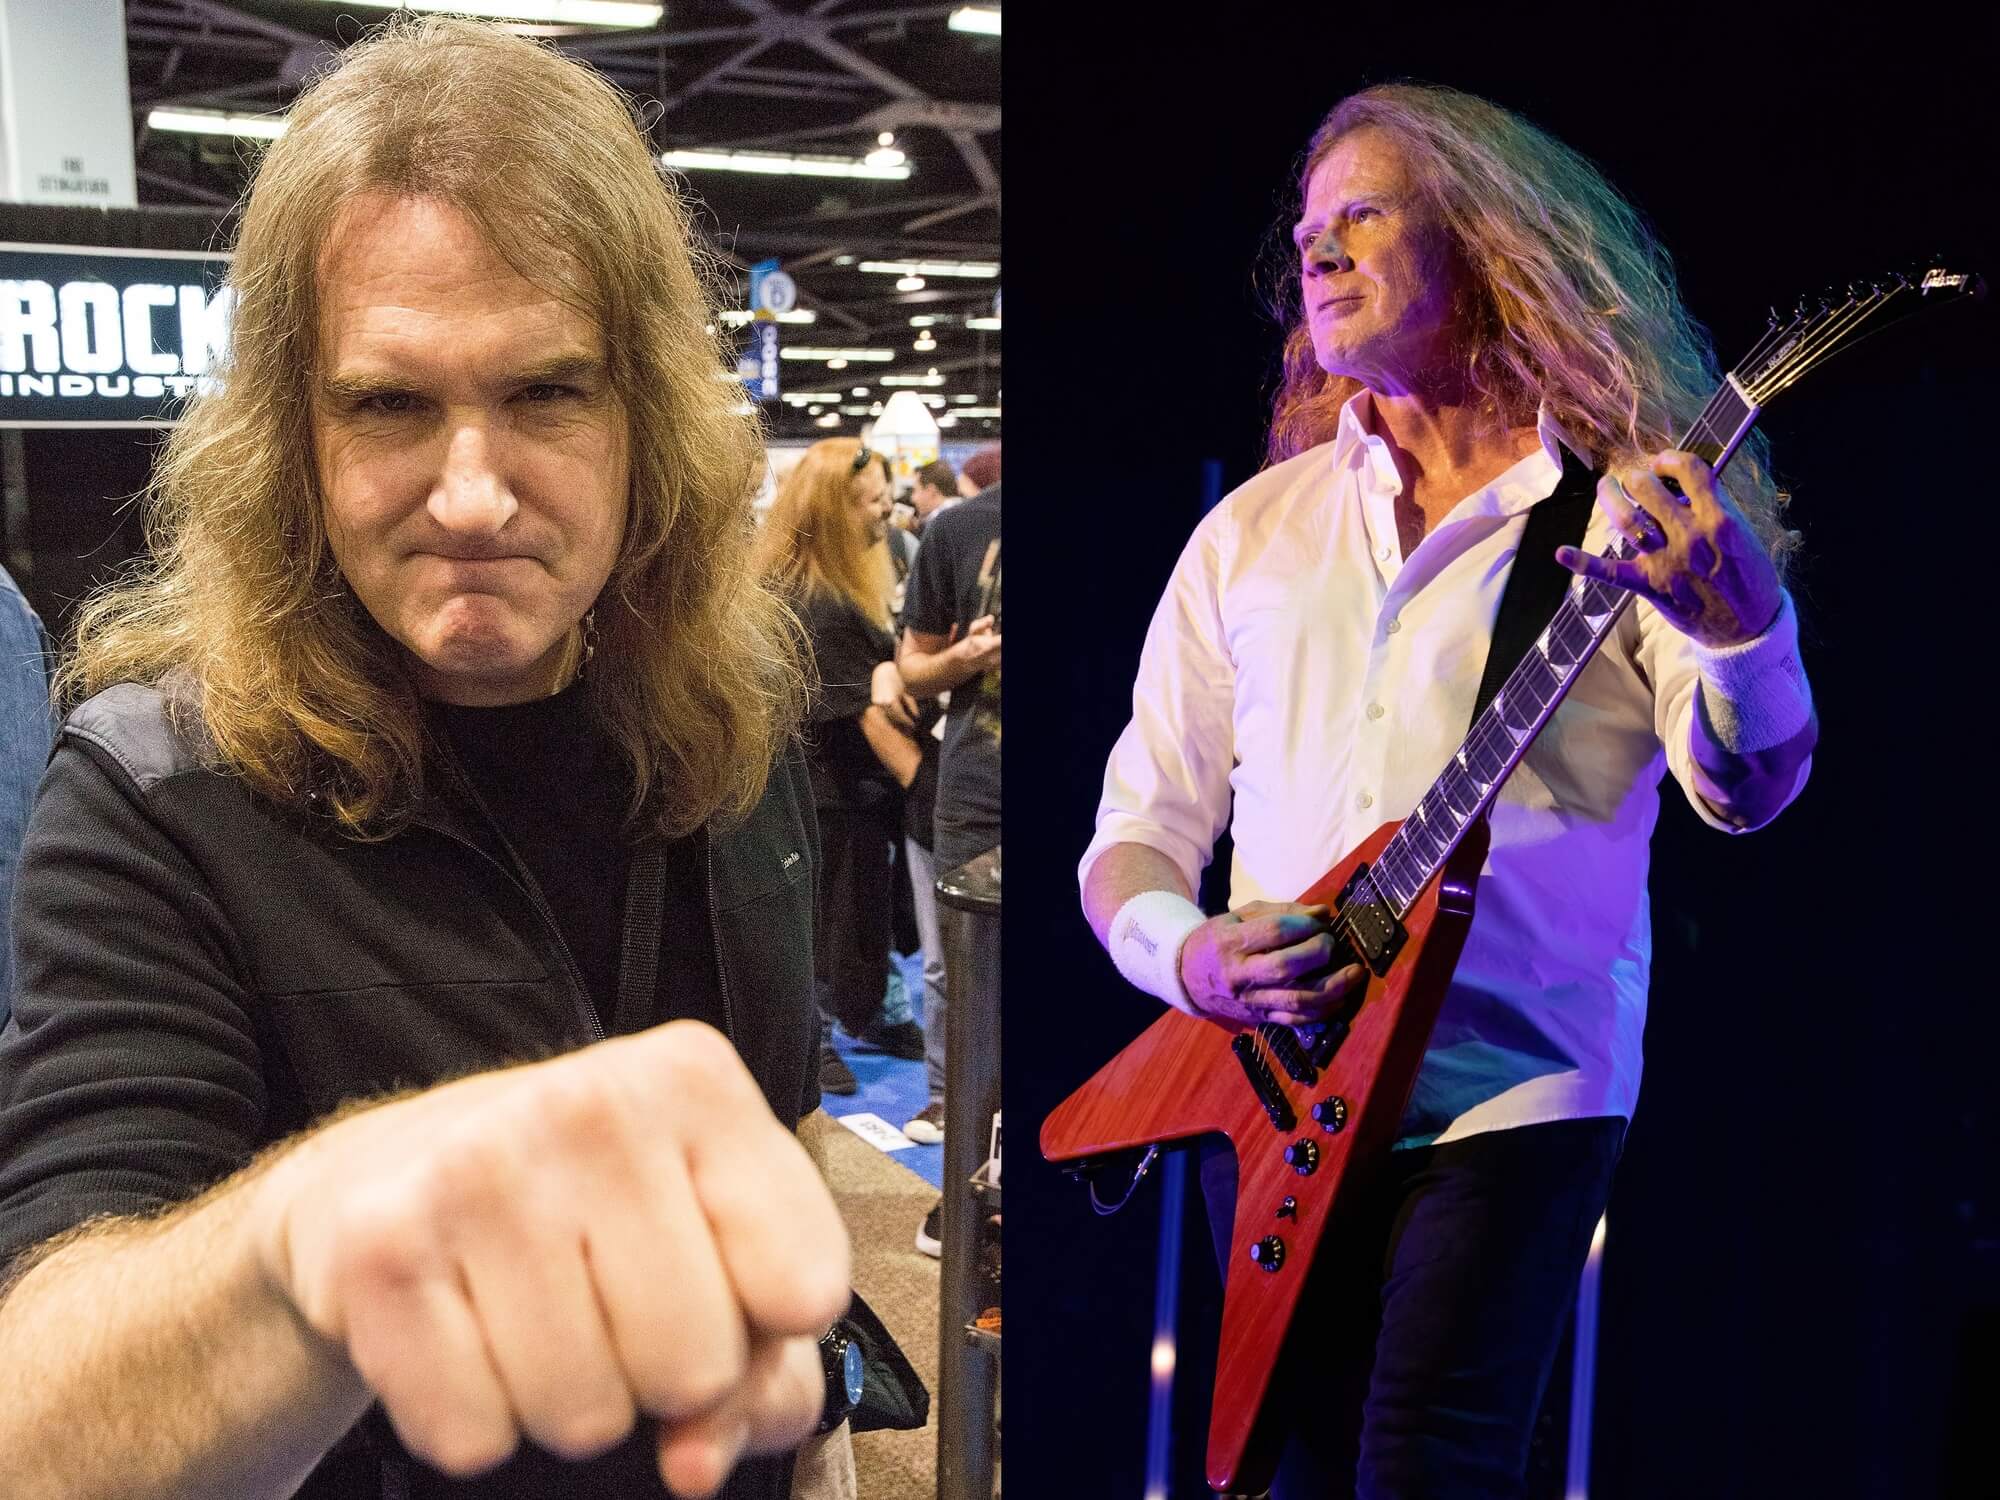 David Ellefson and David Mustaine of Megadeth